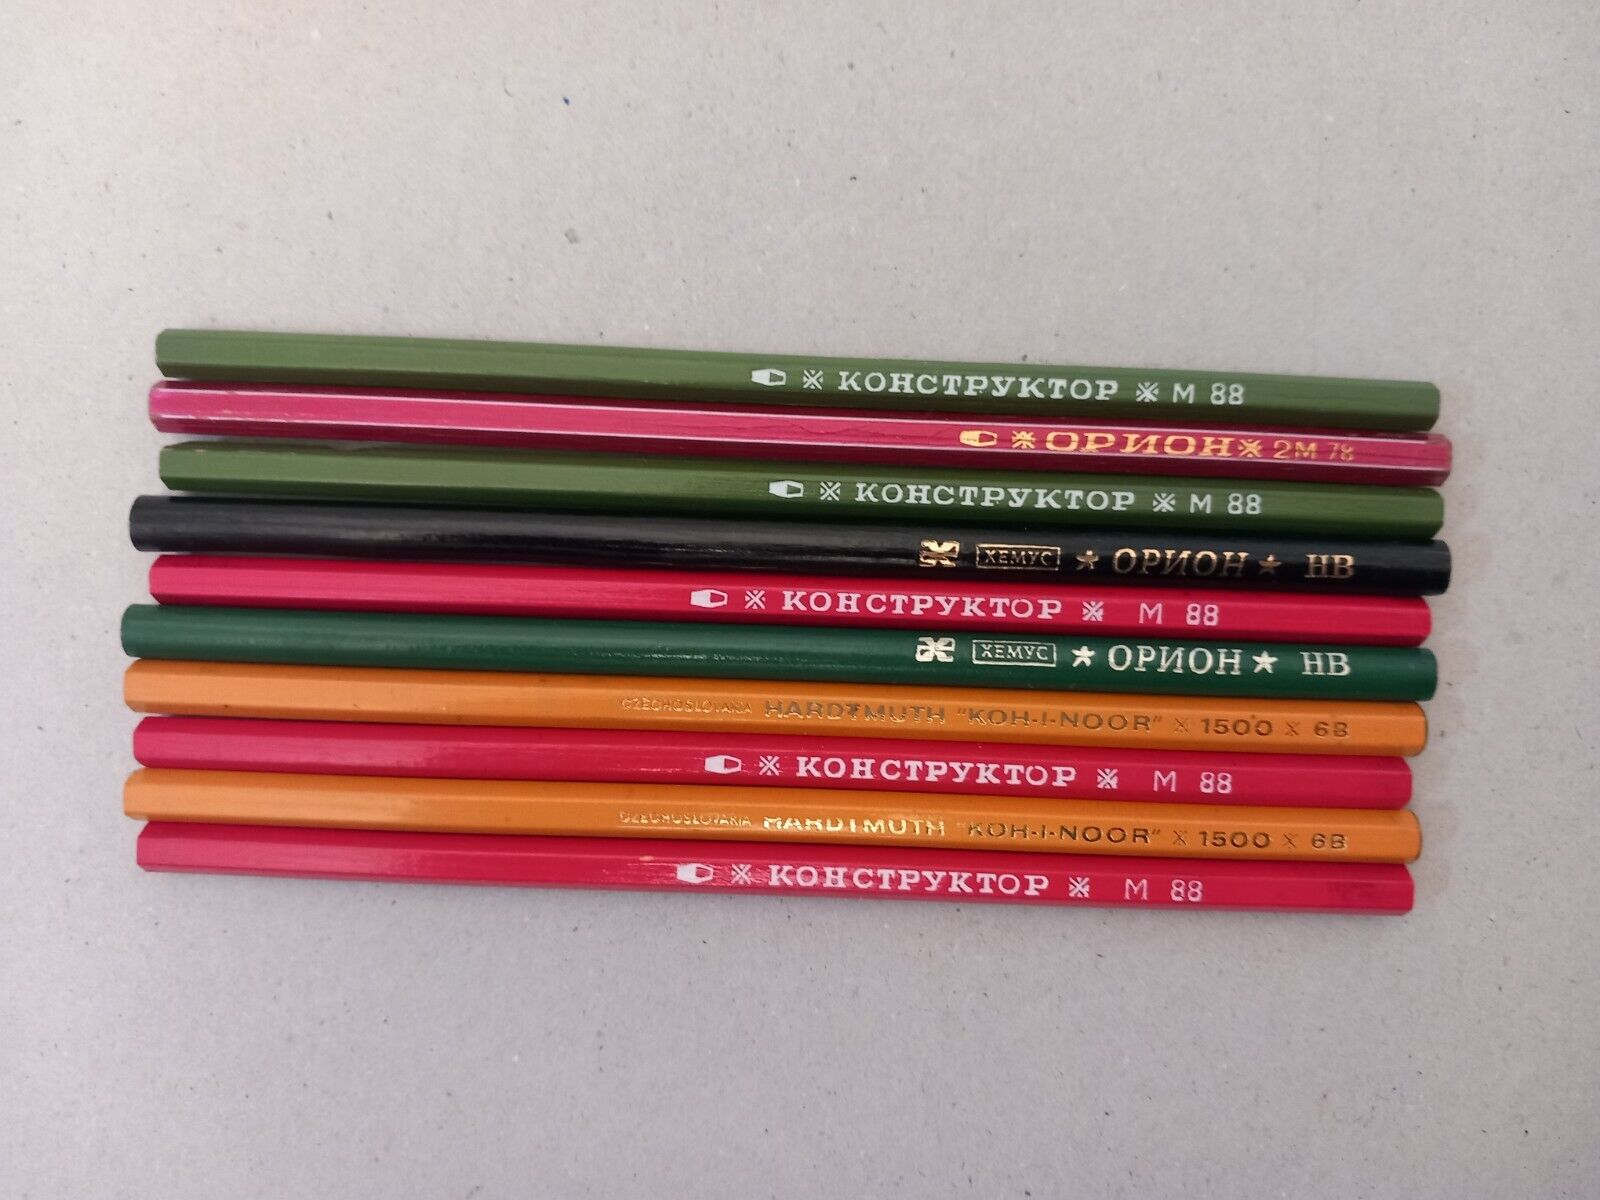 Lot of 10 Vintage 70s/80s Graphite Pencils Unused Bulgarian Russian Czechoslovak